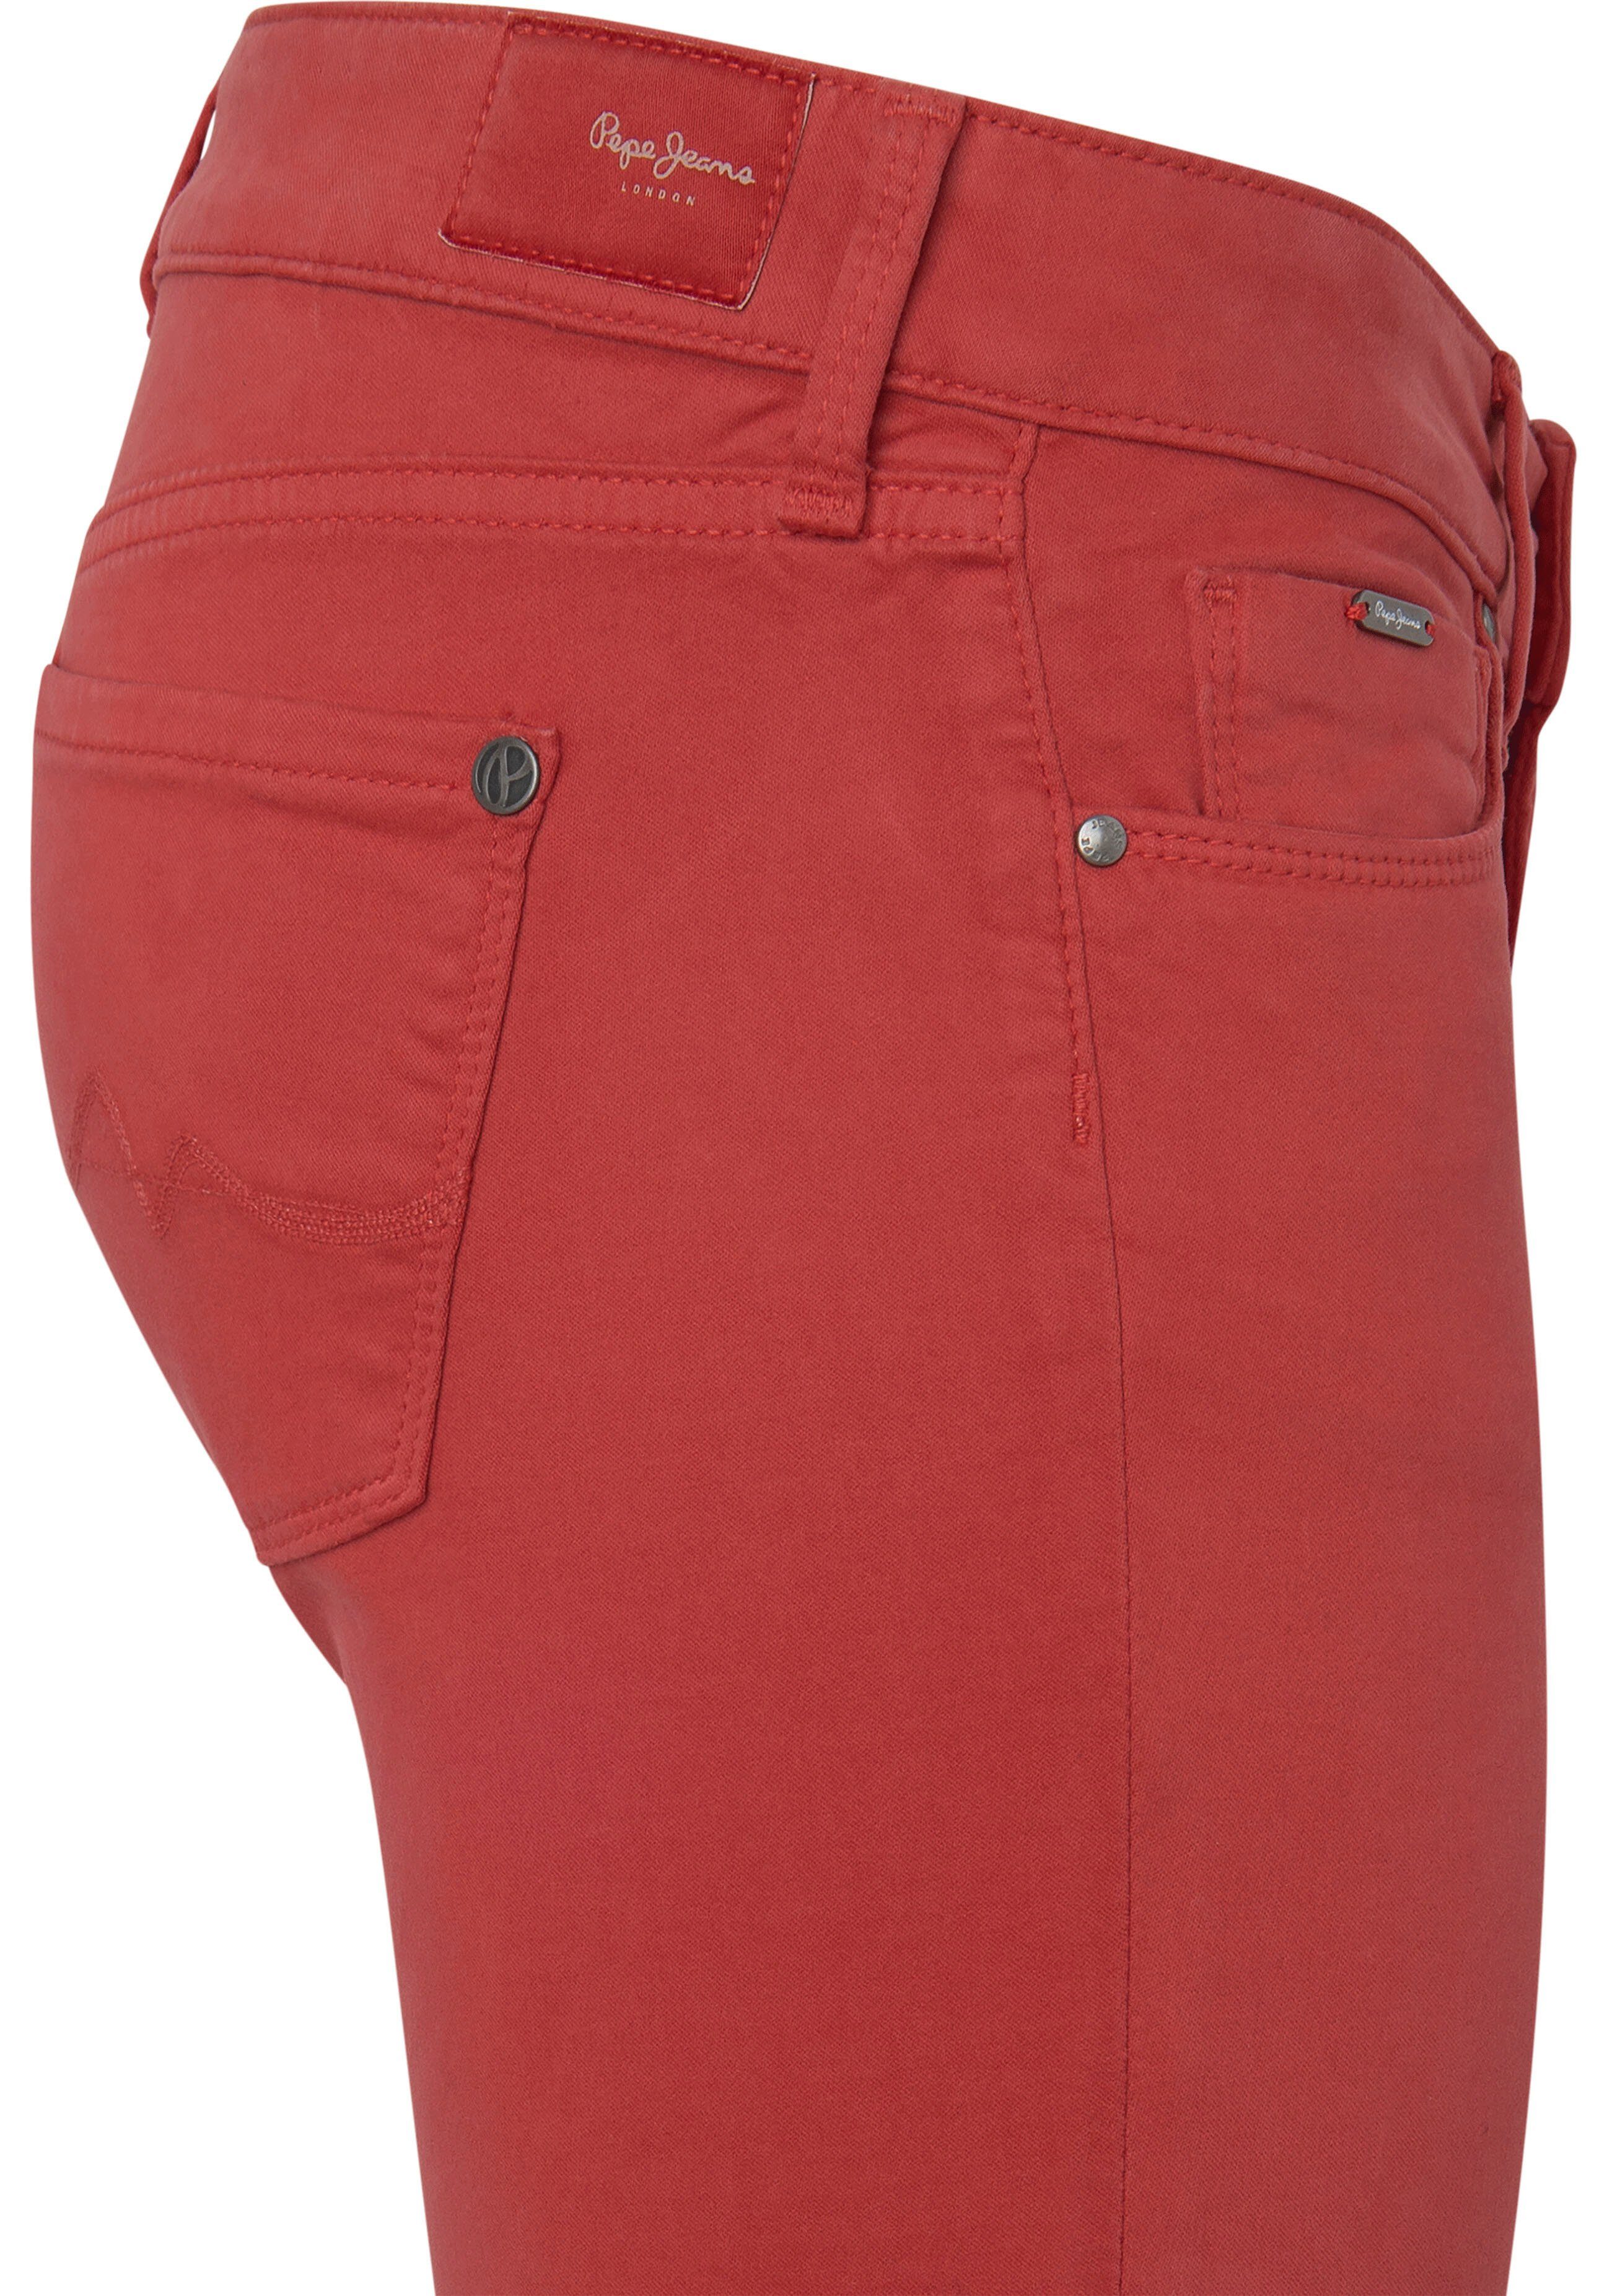 Pepe Jeans 5-Pocket-Hose studio Skinny Soho red